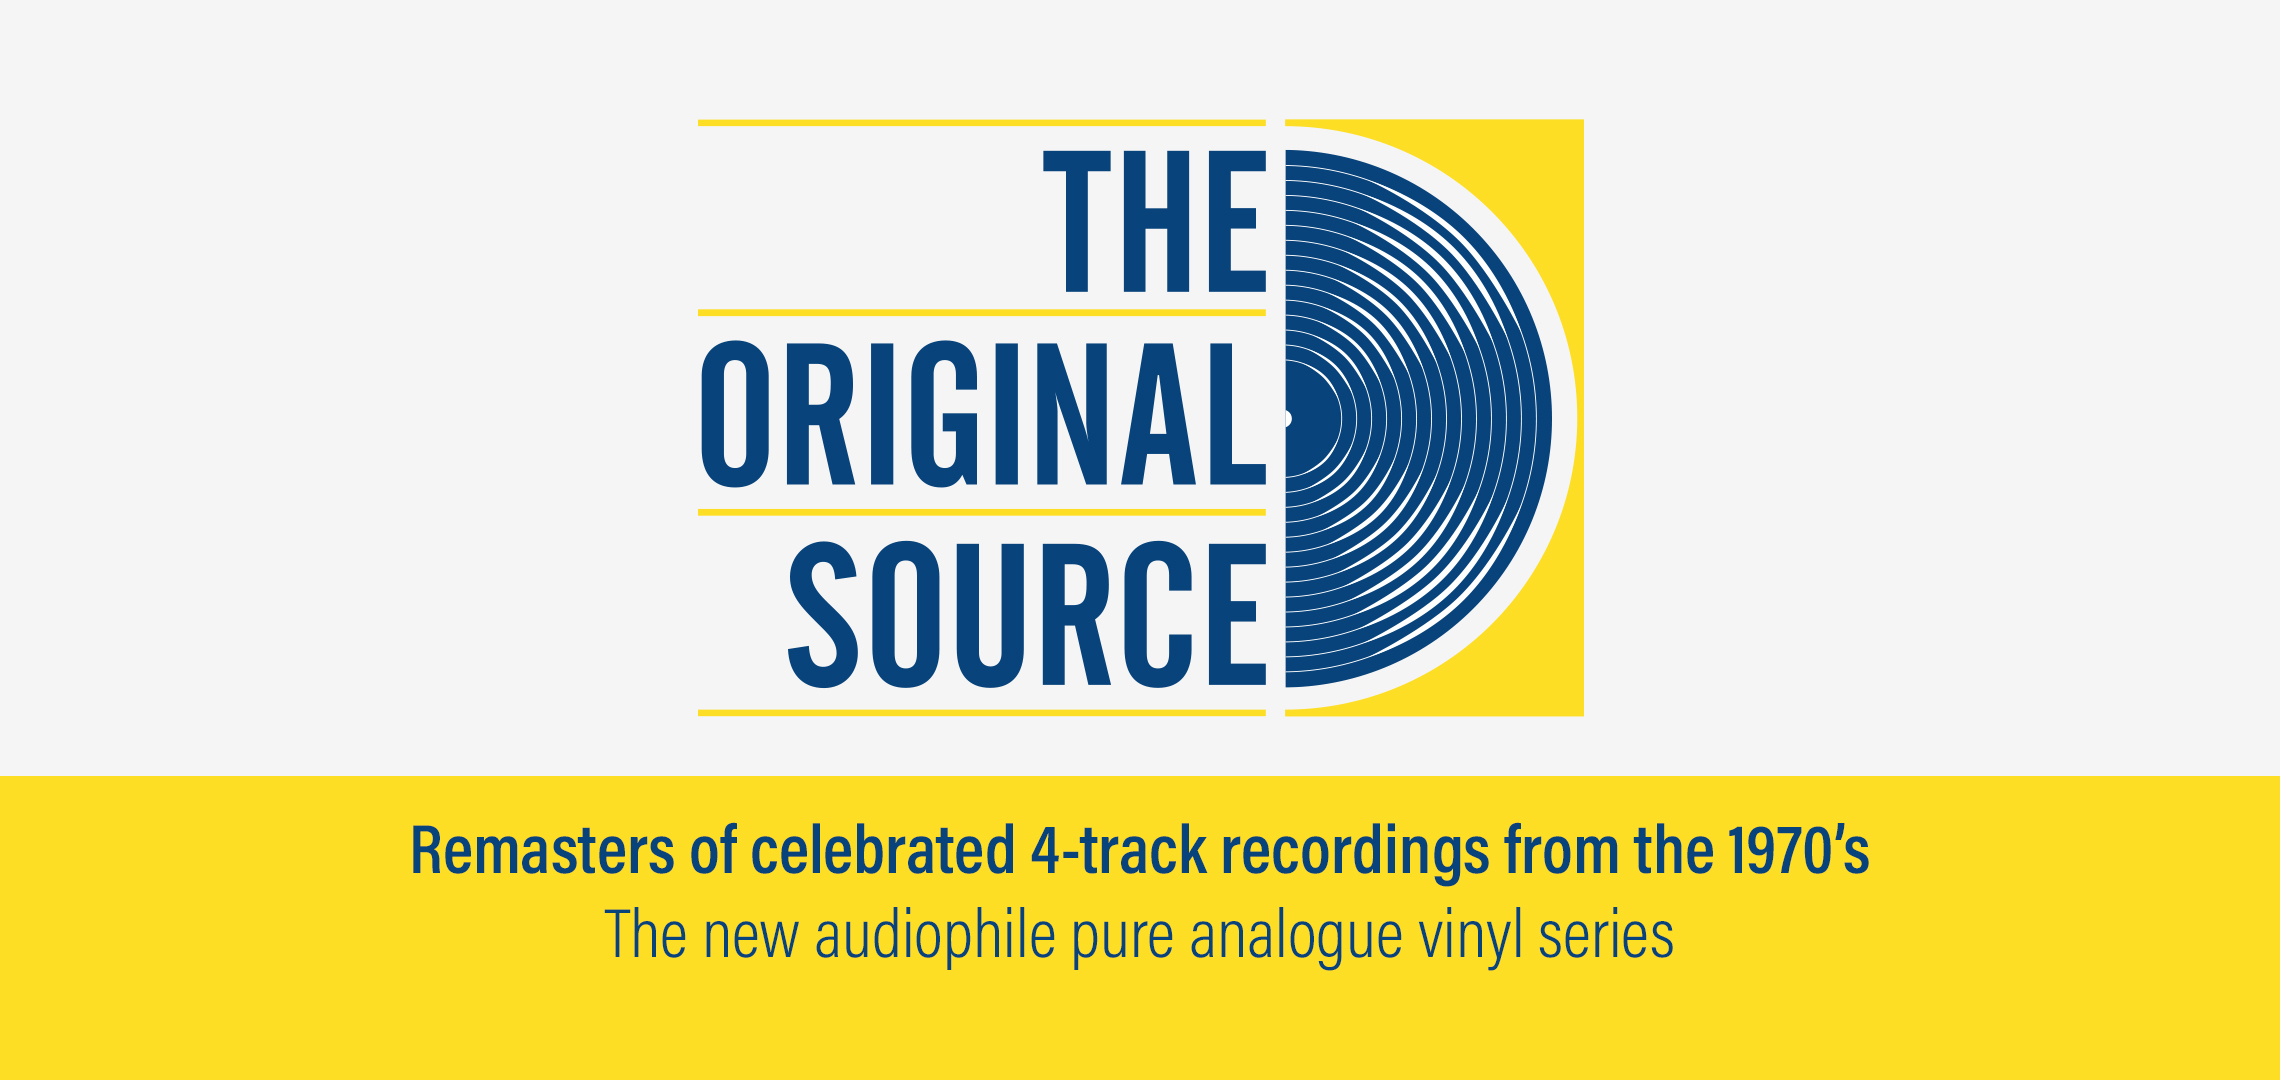 "The Original Source" series from Deutsche Grammophon